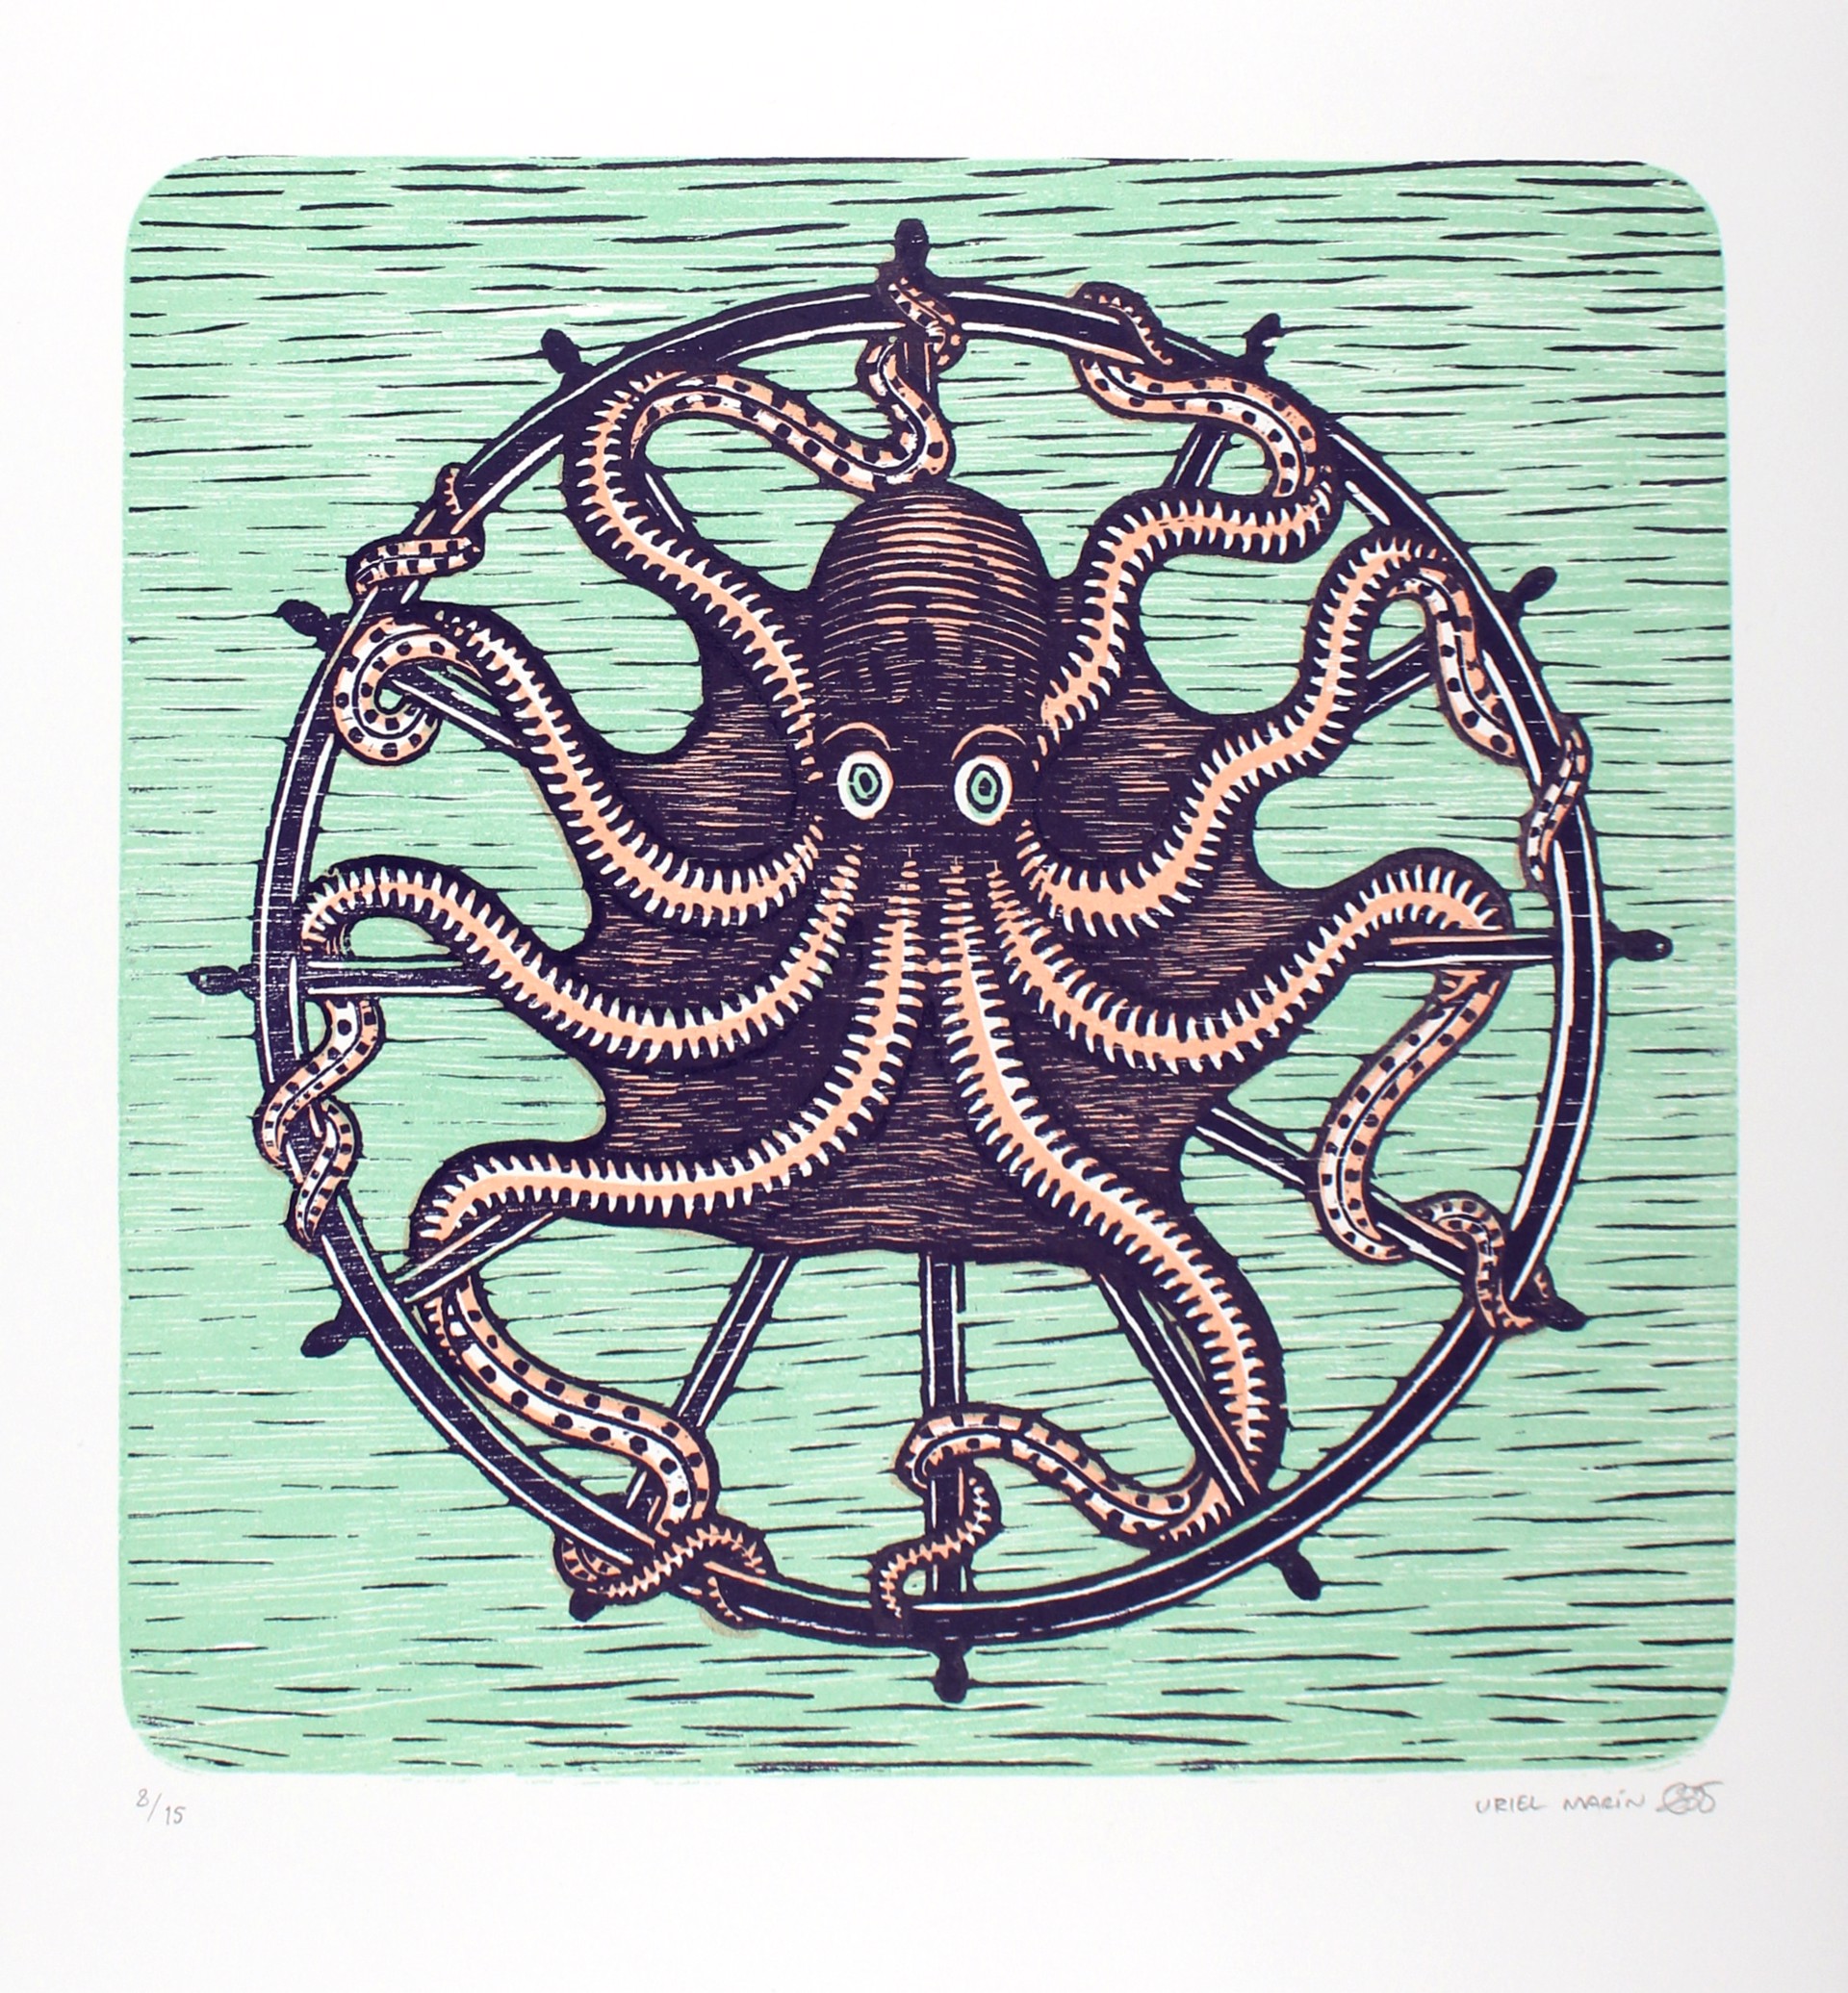 Octopus by Uriel Marin